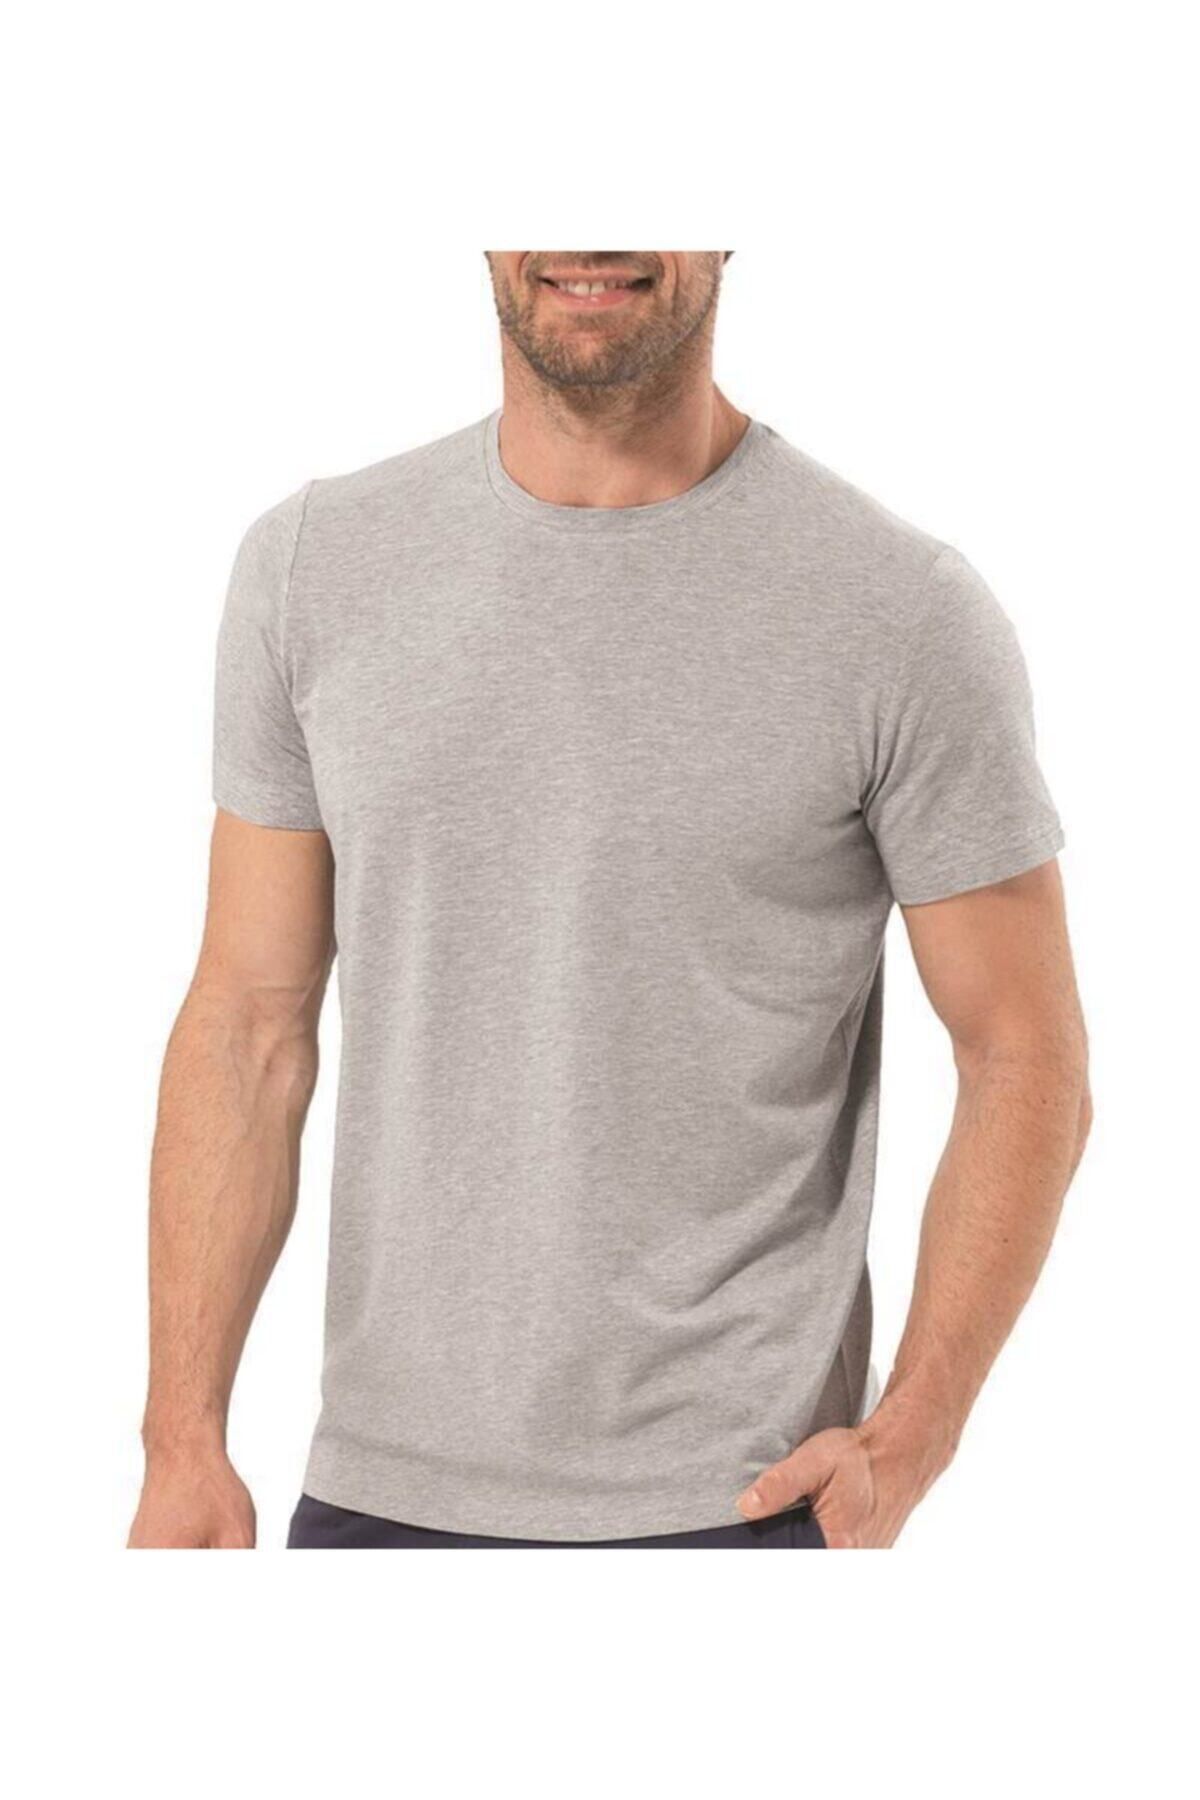 Blackspade Blakspade Erkek Silver T-shirt-9306-gri Melanj